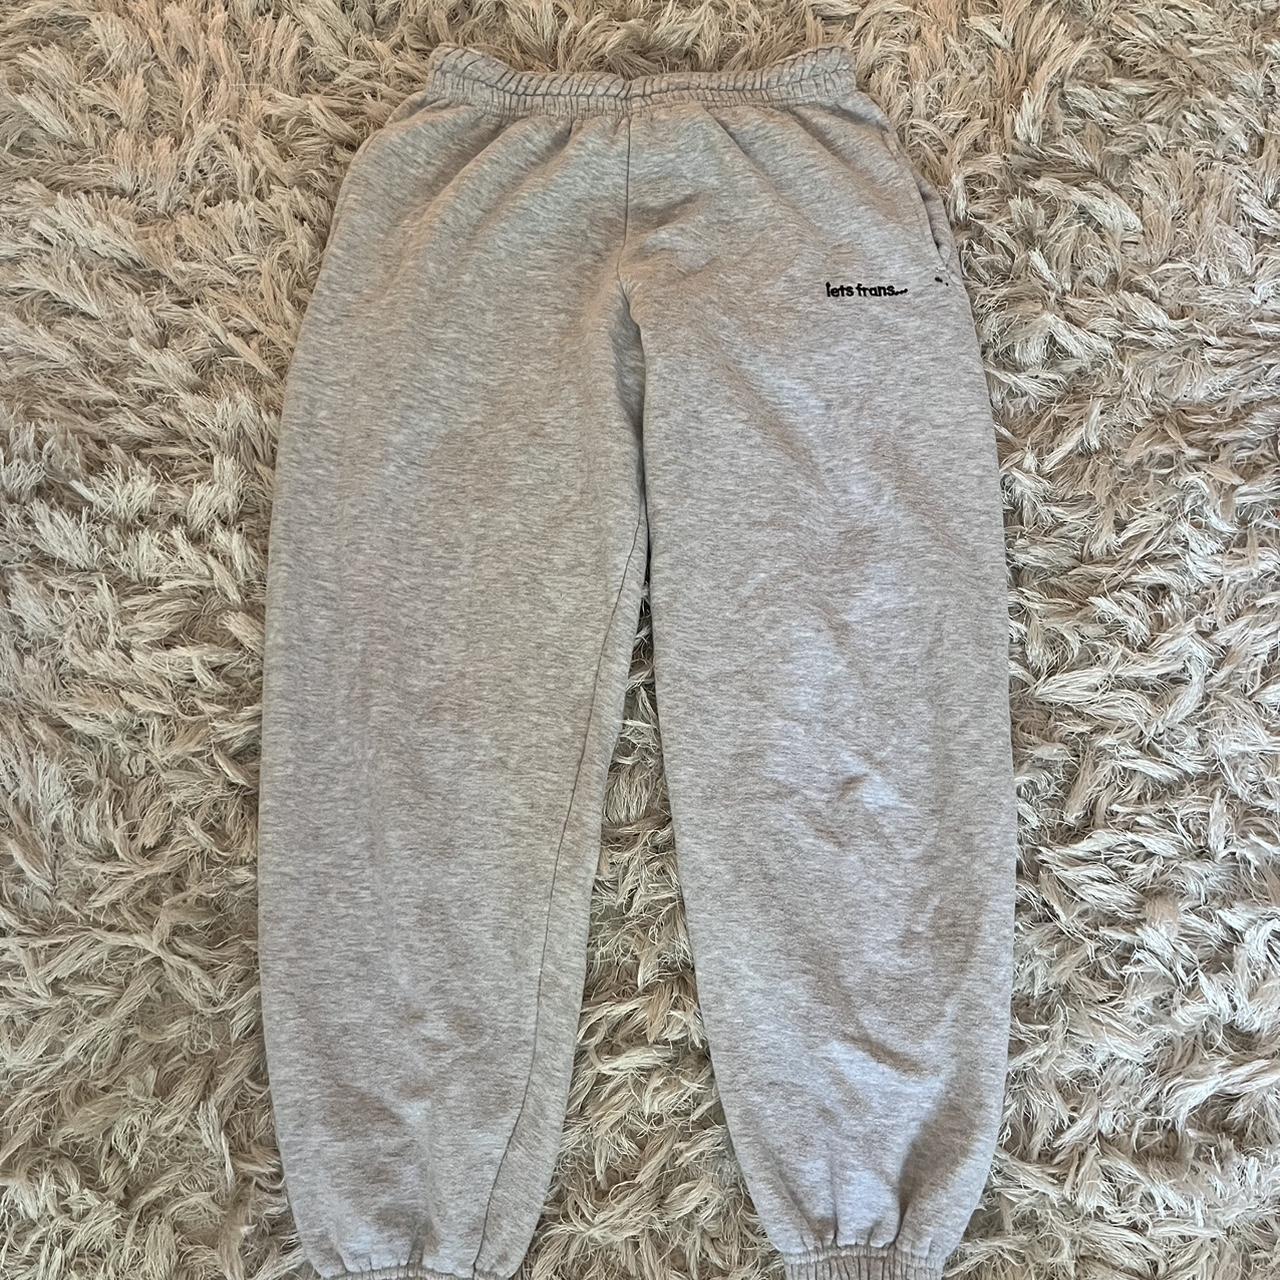 Grey iets frans sweatpants (size small) -small black... - Depop